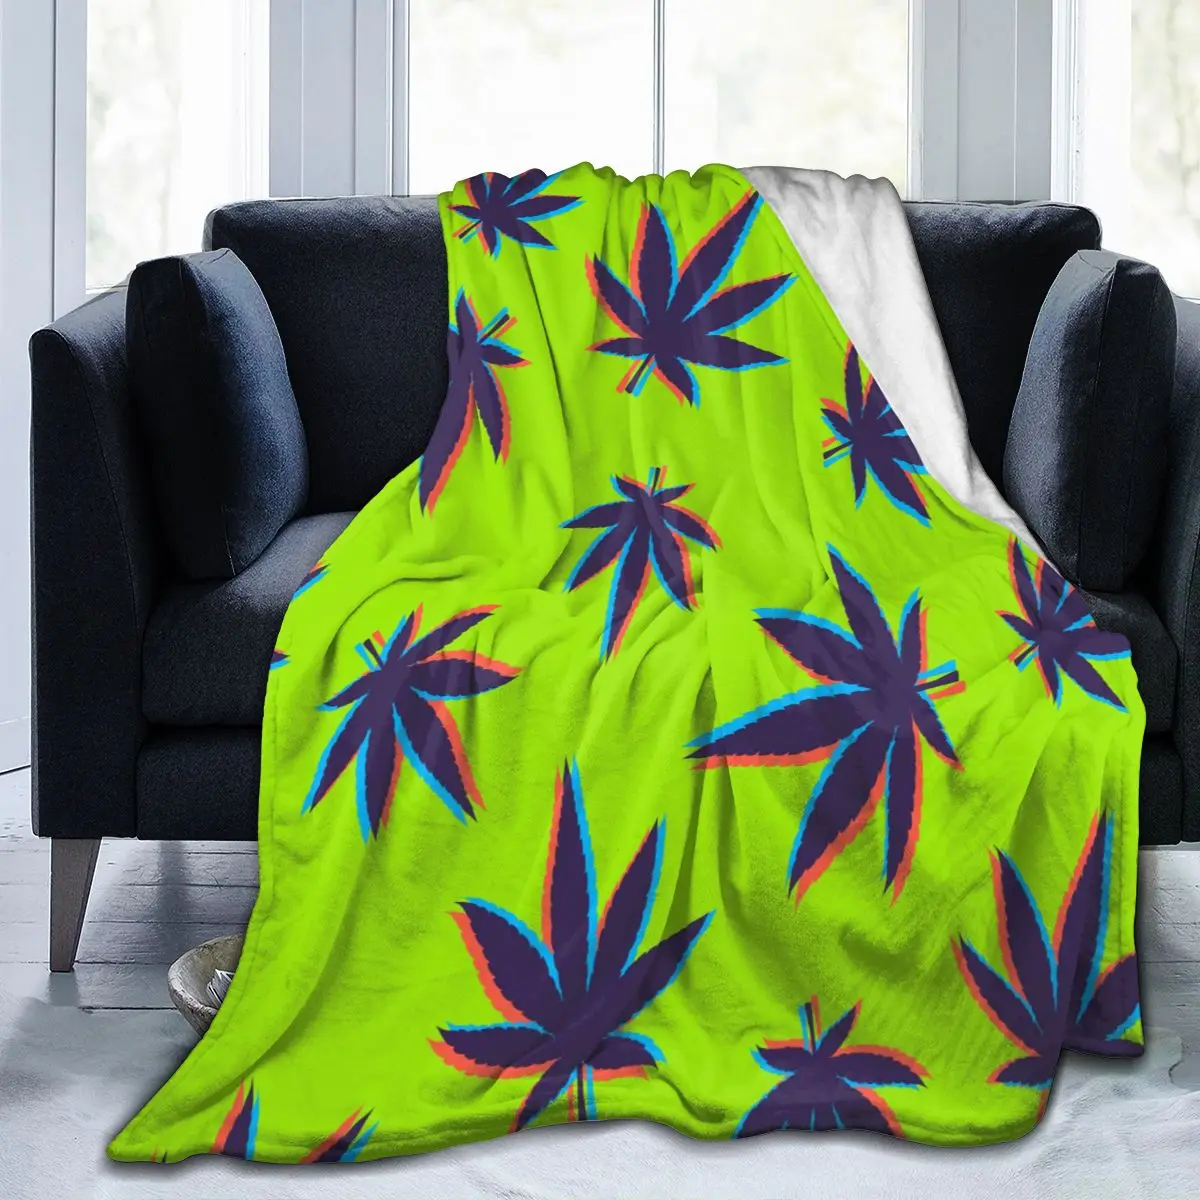 

Фланелевое Одеяло с листьями, ультра-мягкое Флисовое одеяло, одеяло для халата, дивана, кровати, путешествий, дома, зима, весна, осень